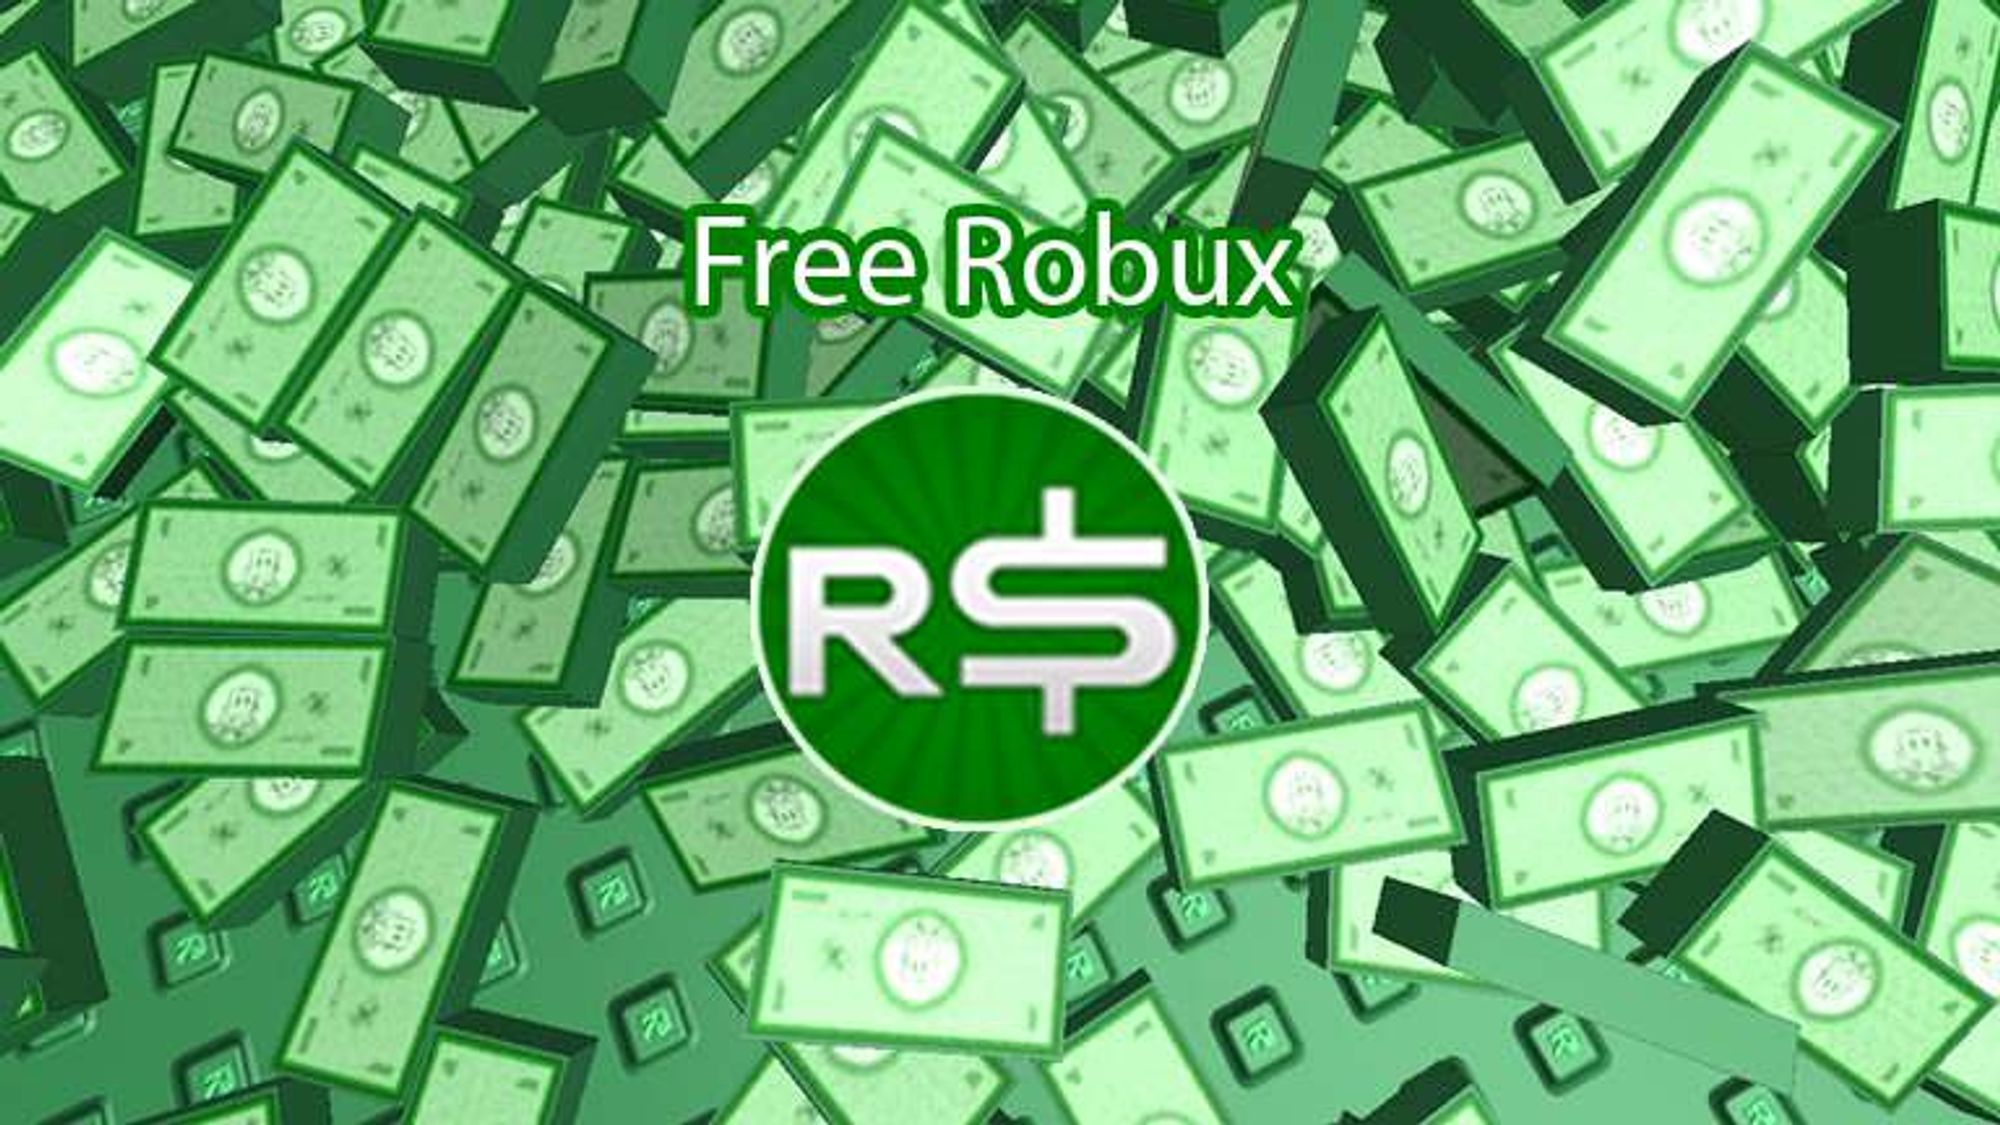 roblox hack free robux and tix no survey no human verification roblox hack free robux and tix no survey no human verification movellas